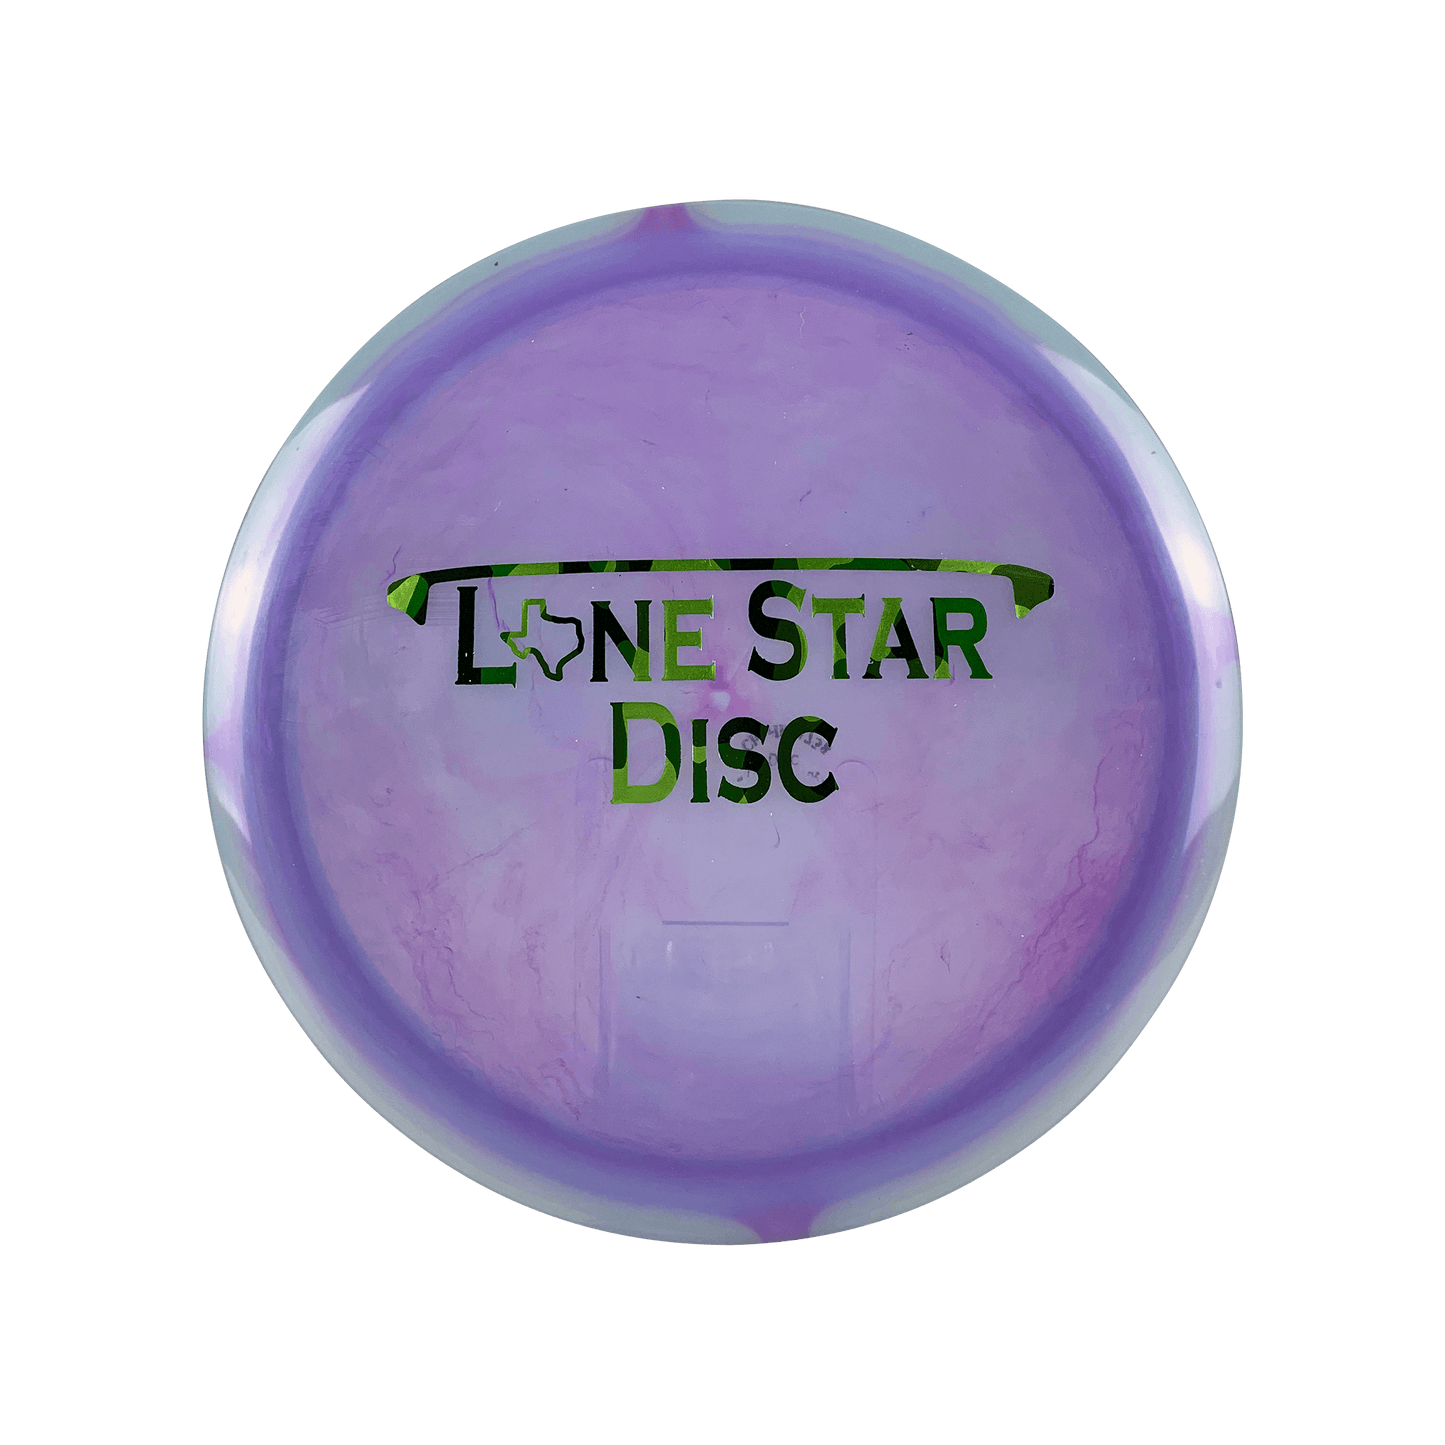 Charlie Frio - Lone Star Bar Stamp Disc Lonestar Disc multi / purple 173 